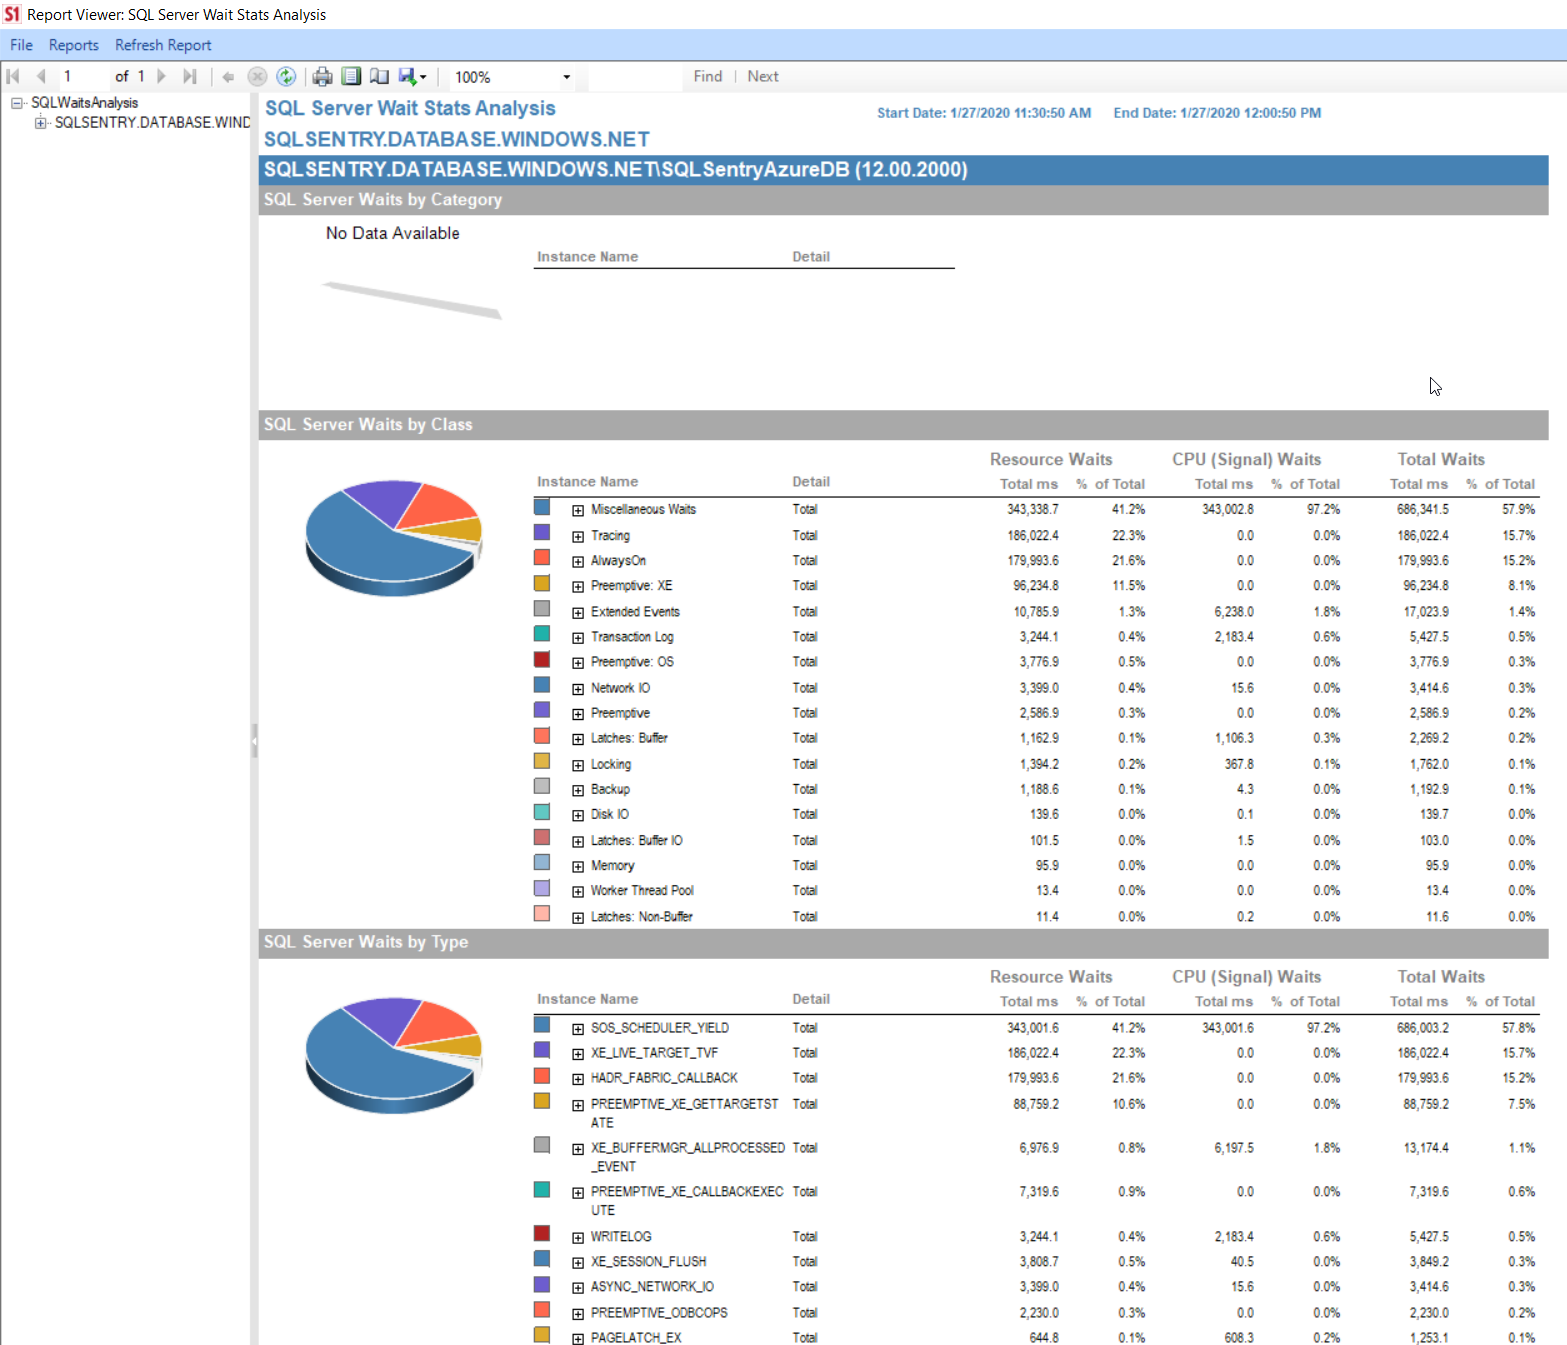 Report Viewer SQL Server Wait Stat Analysis